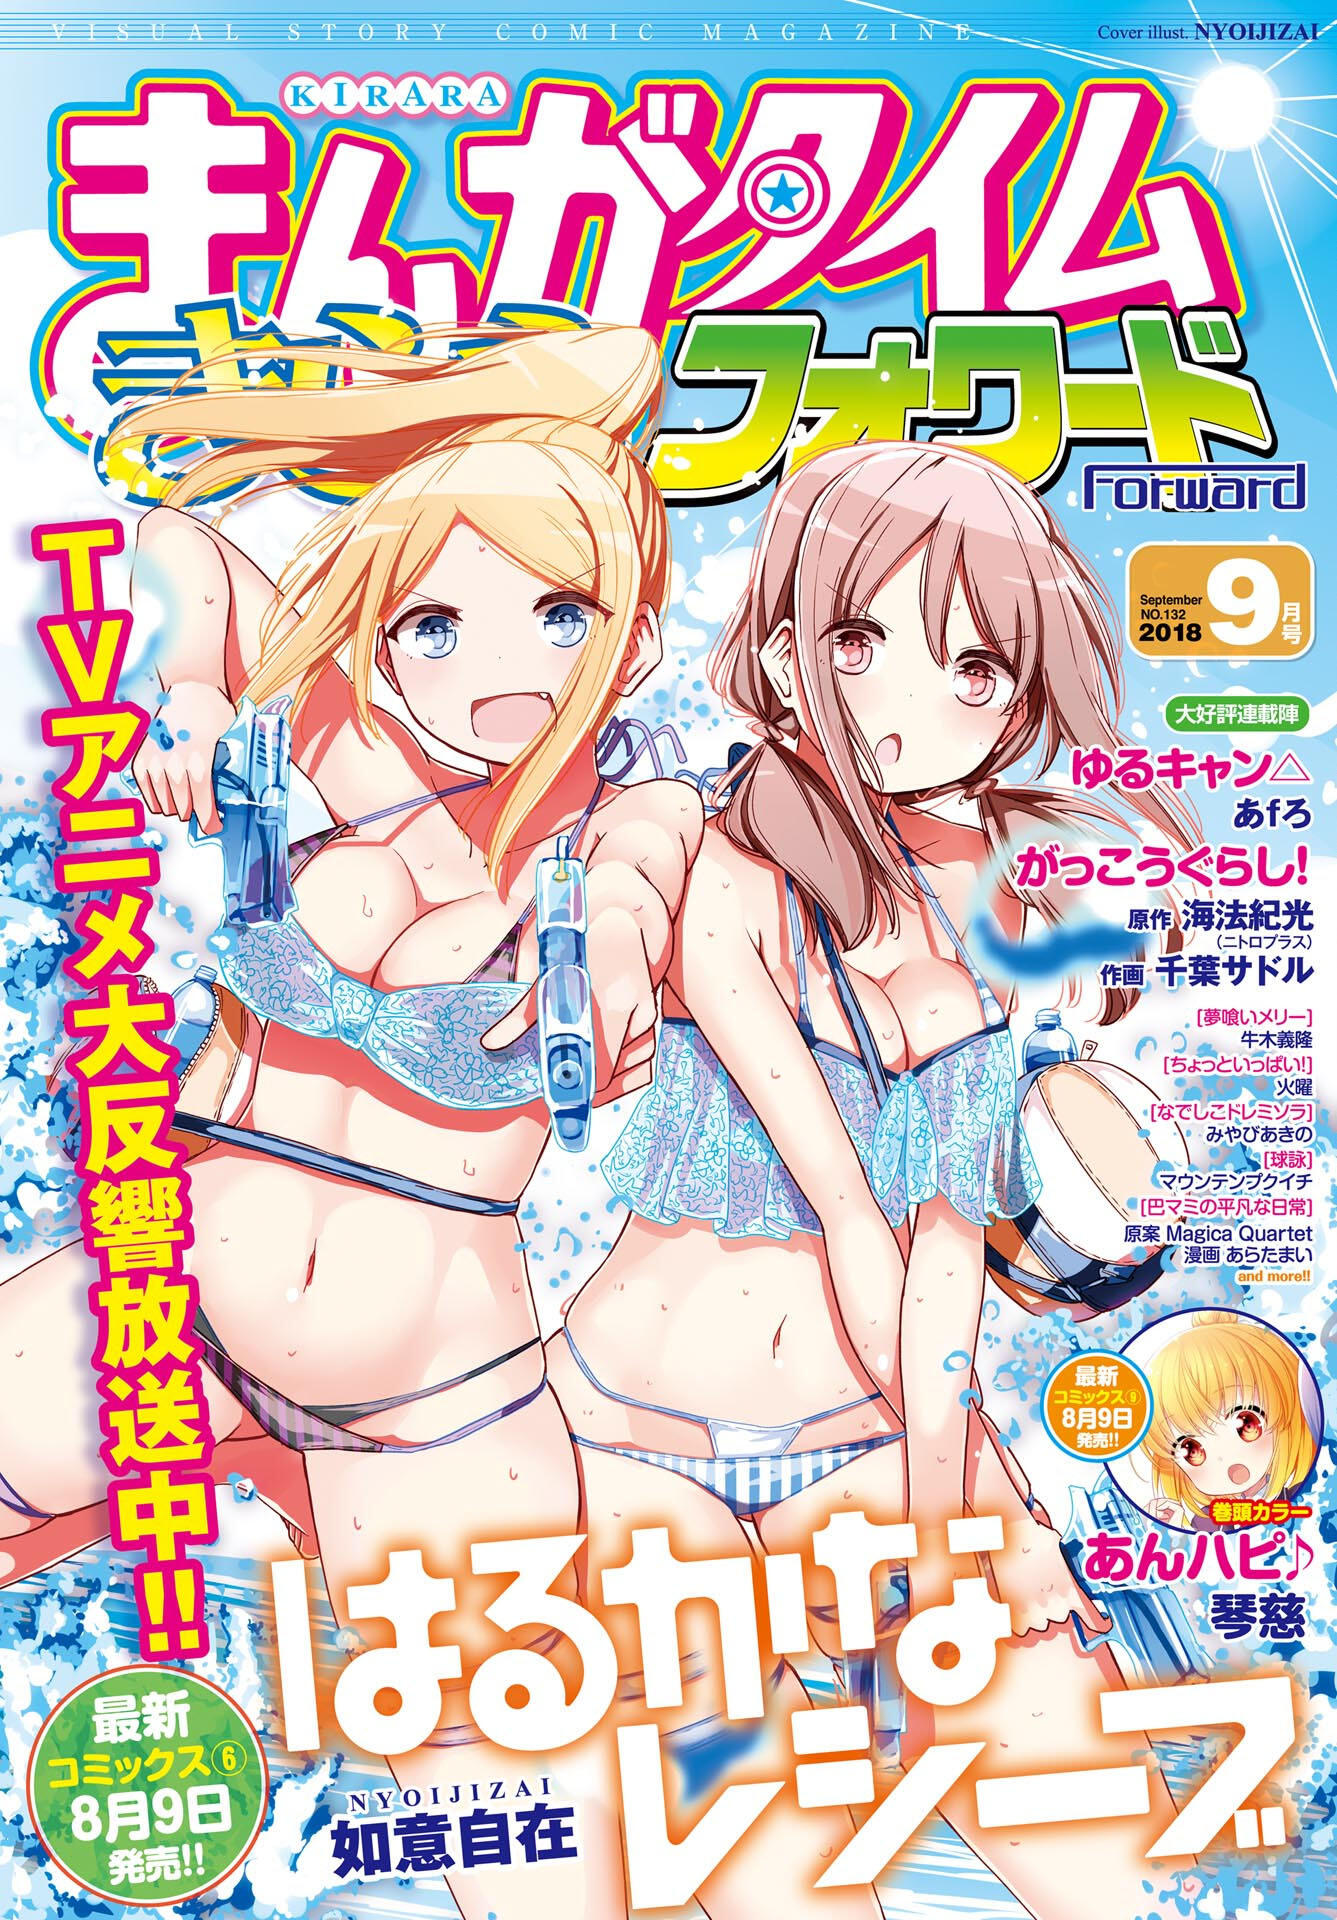 Harukana Receive Manga Volume 8